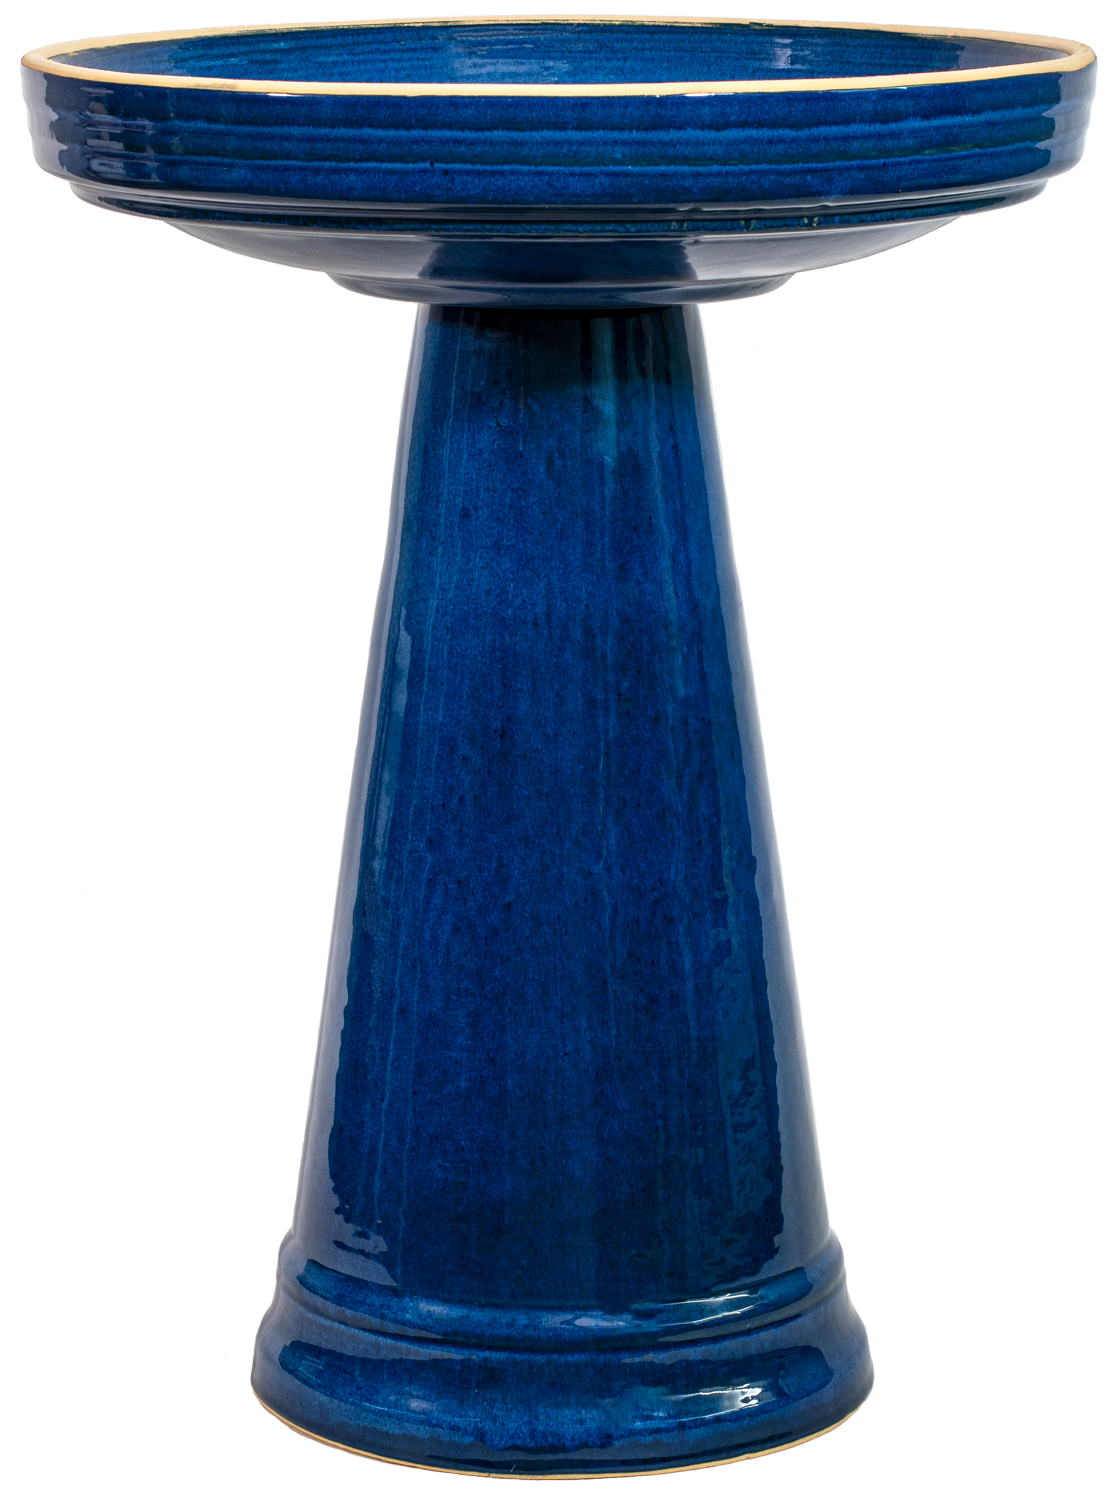 ceramic Blue birdbath with simple modern smooth design